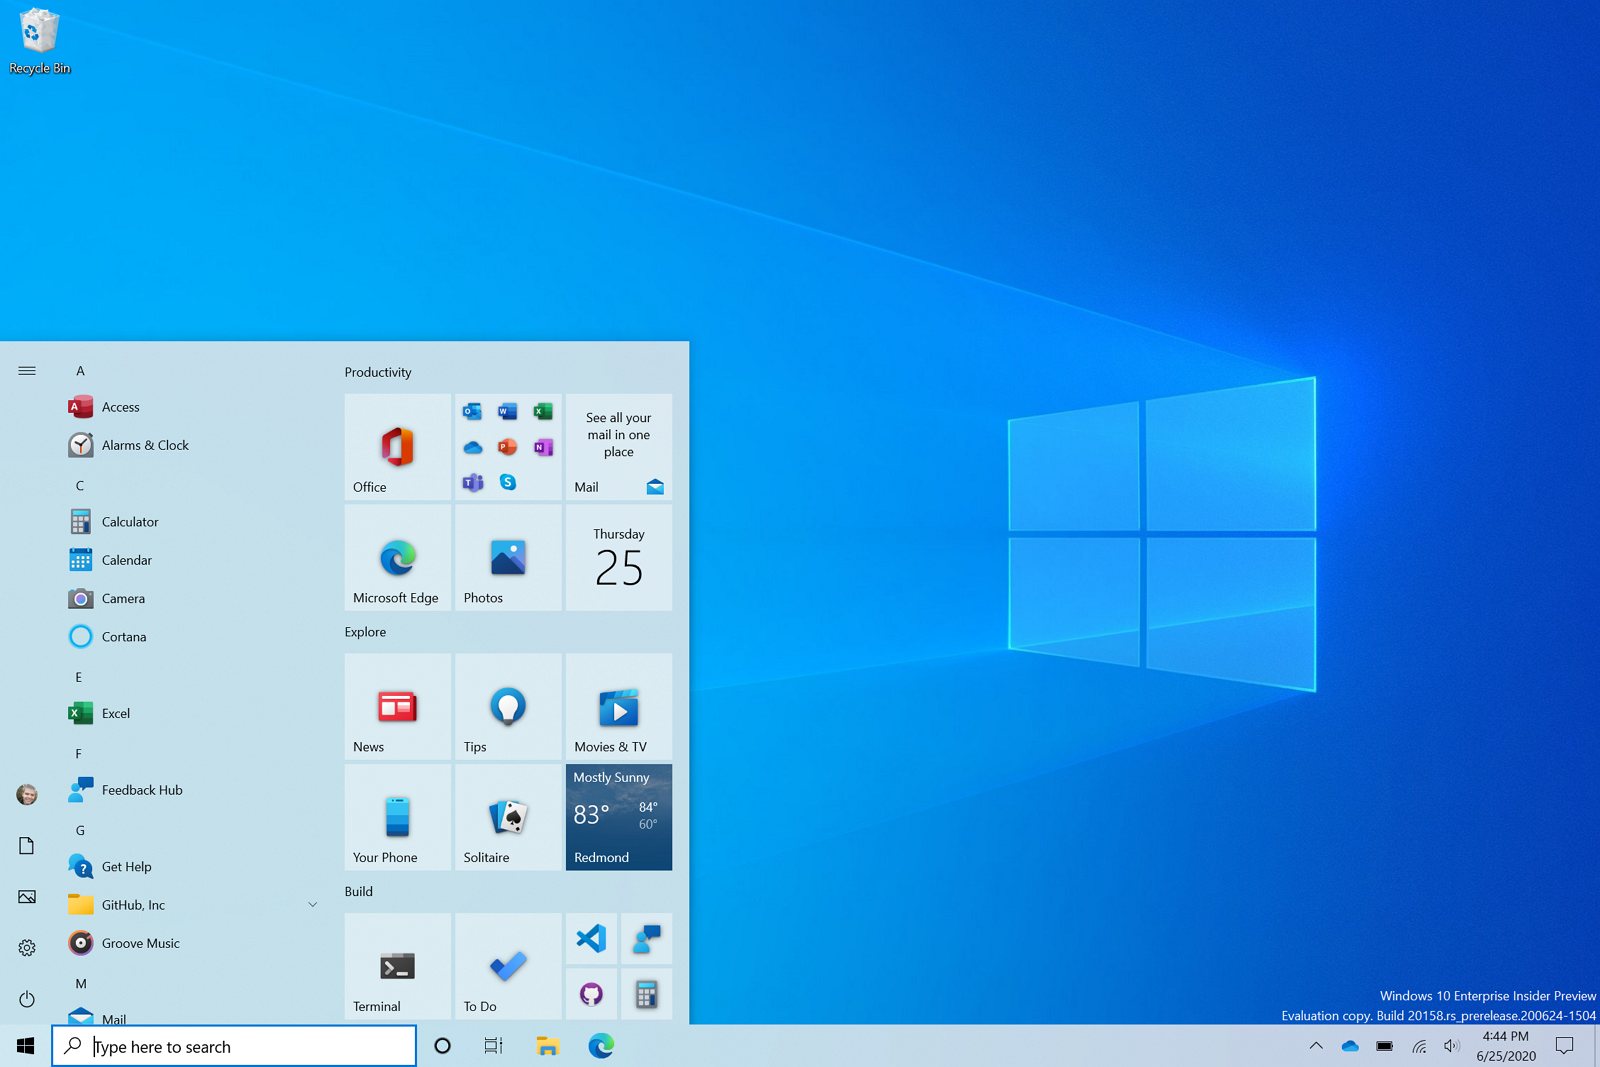 Windows 10 new Start menu design (source Microsoft)